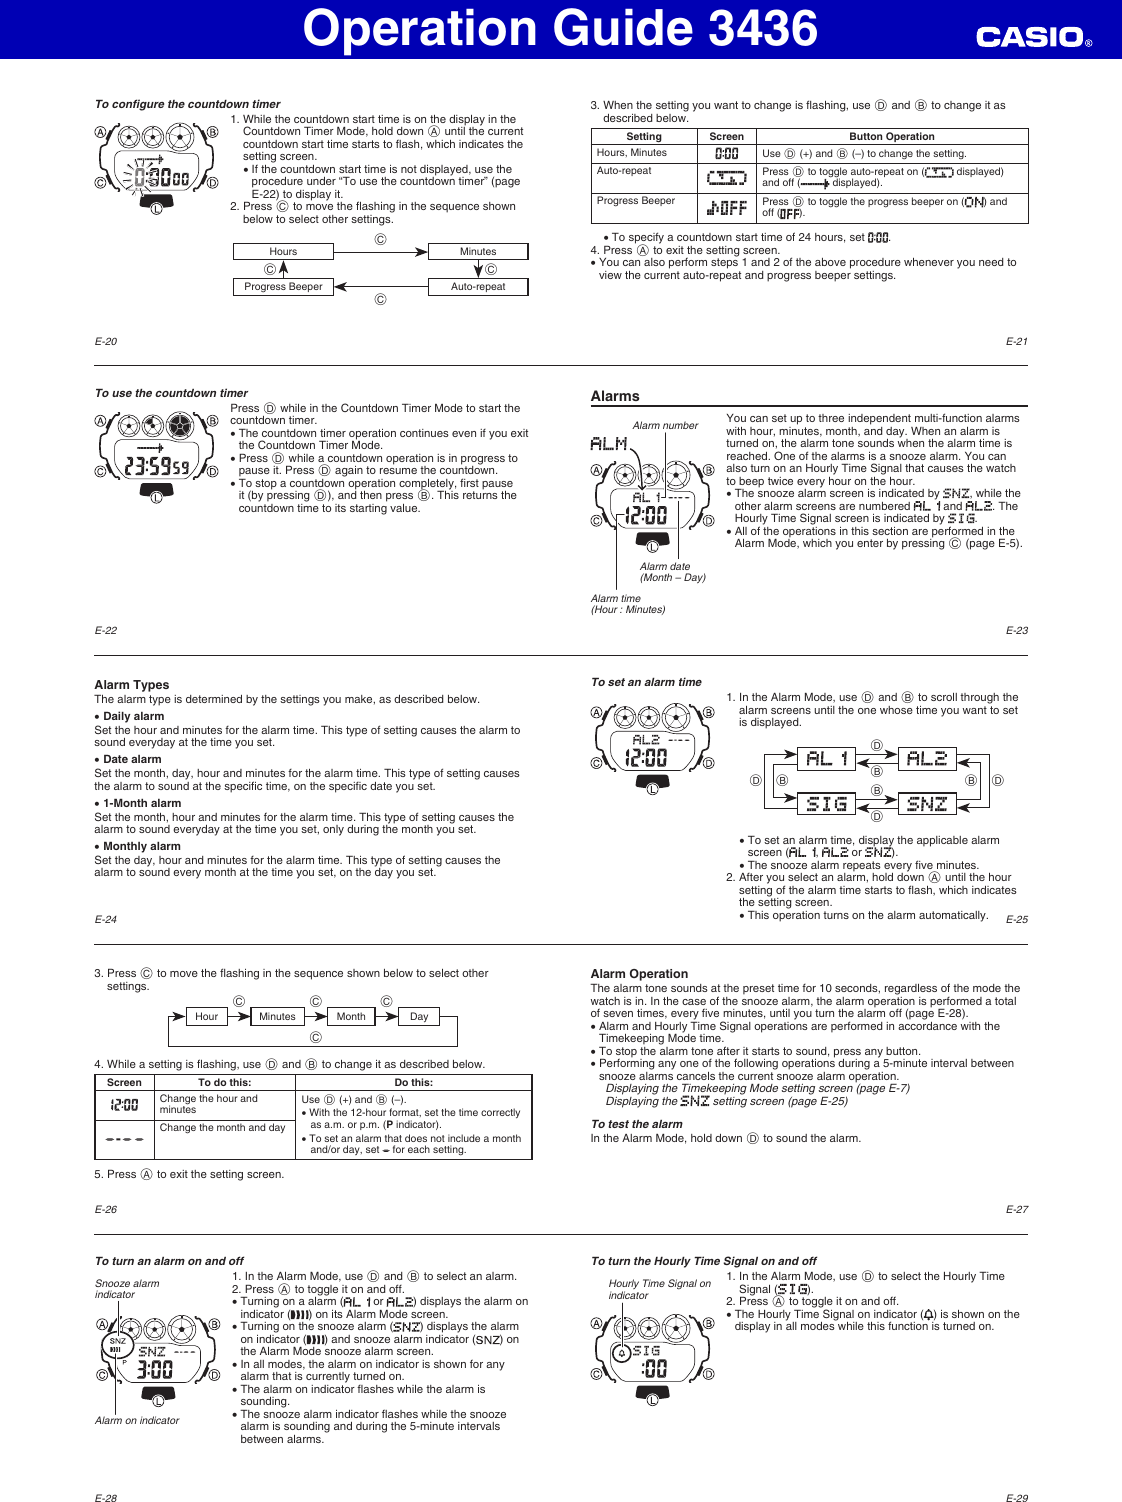 Page 3 of 5 - Casio MA1405-EA QW-3436 User Manual  To The Bd1bb088-964e-46fb-afb3-ad01ccfcbfc5